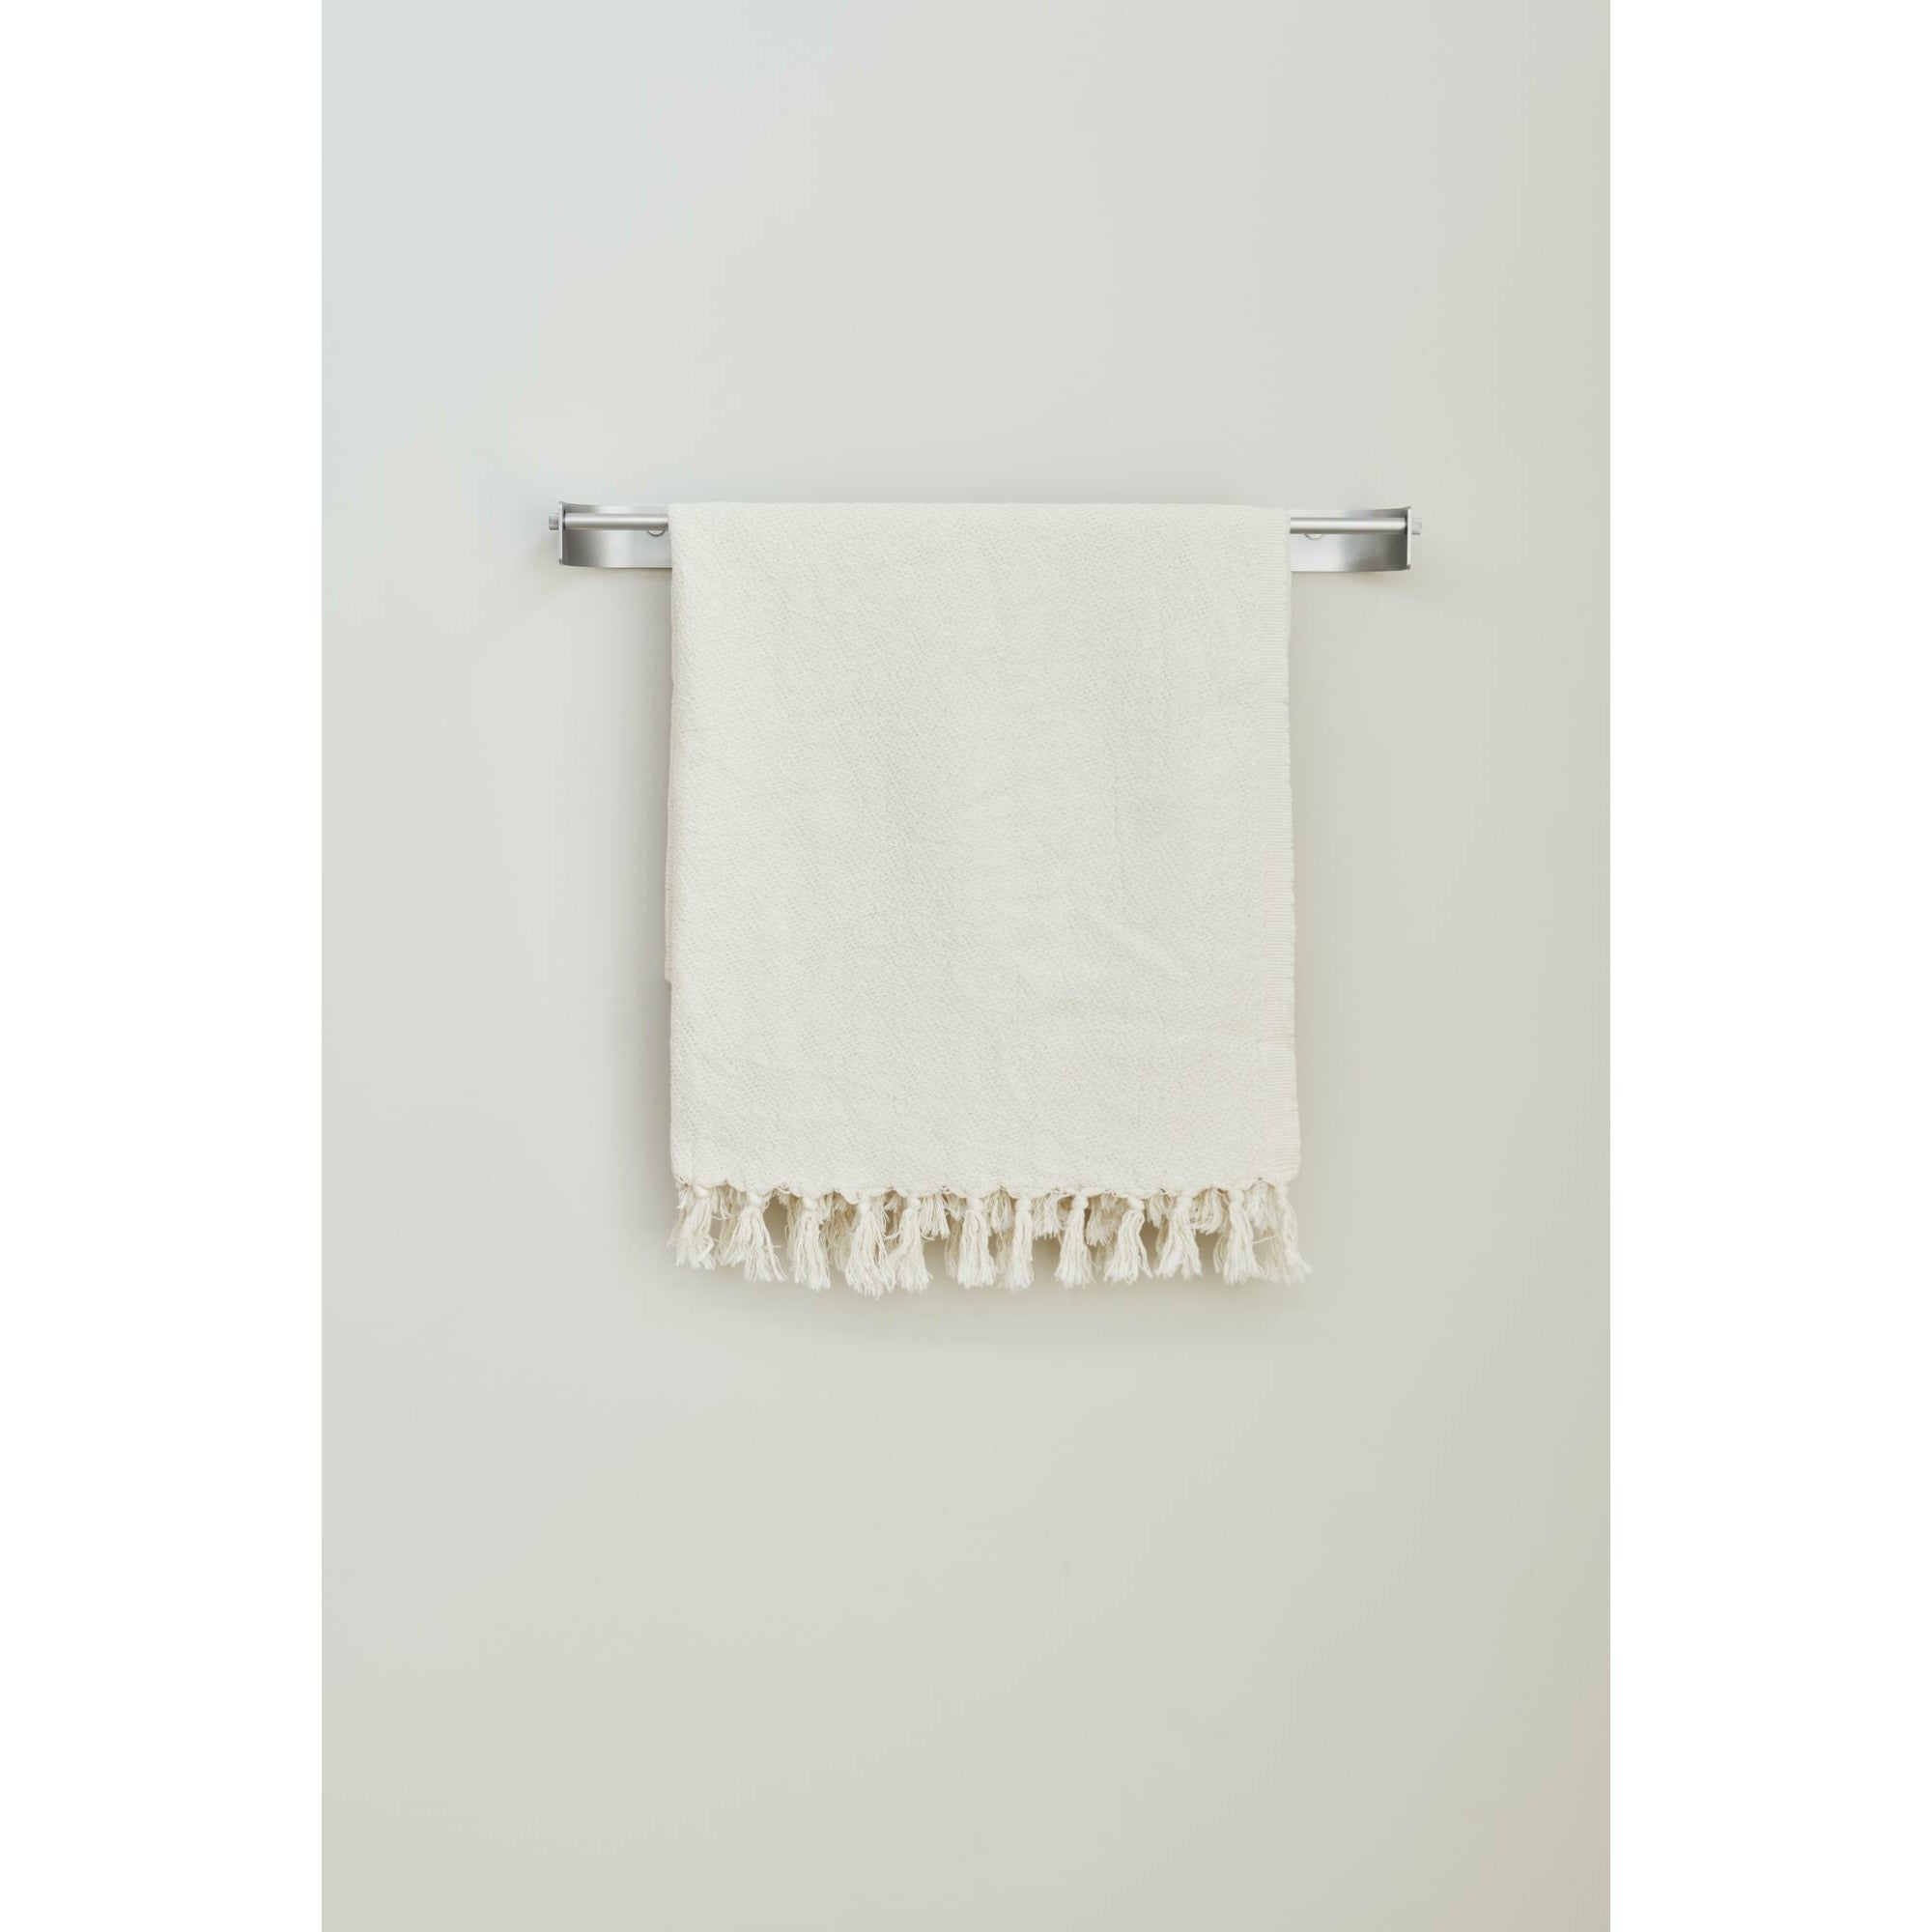 Form & Refine Arc handdoek Bar single. Staal